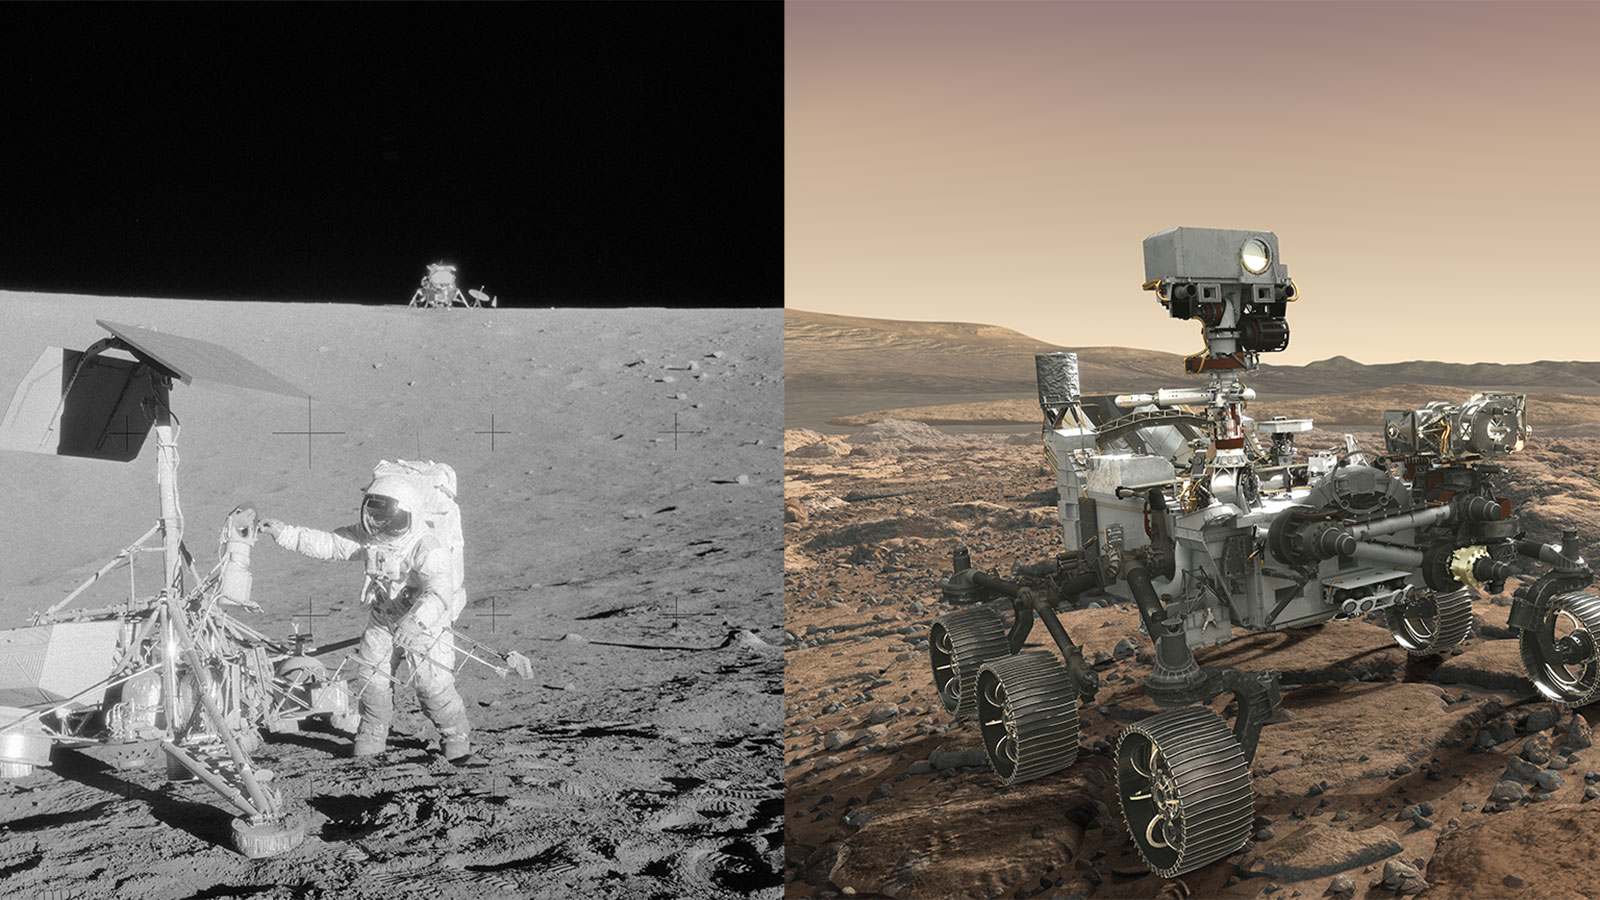  Apollo 12 astronaut Charles “Pete” Conrad Jr. stands beside NASA's Surveyor 3 spacecraft and artist's concept of Mars rover